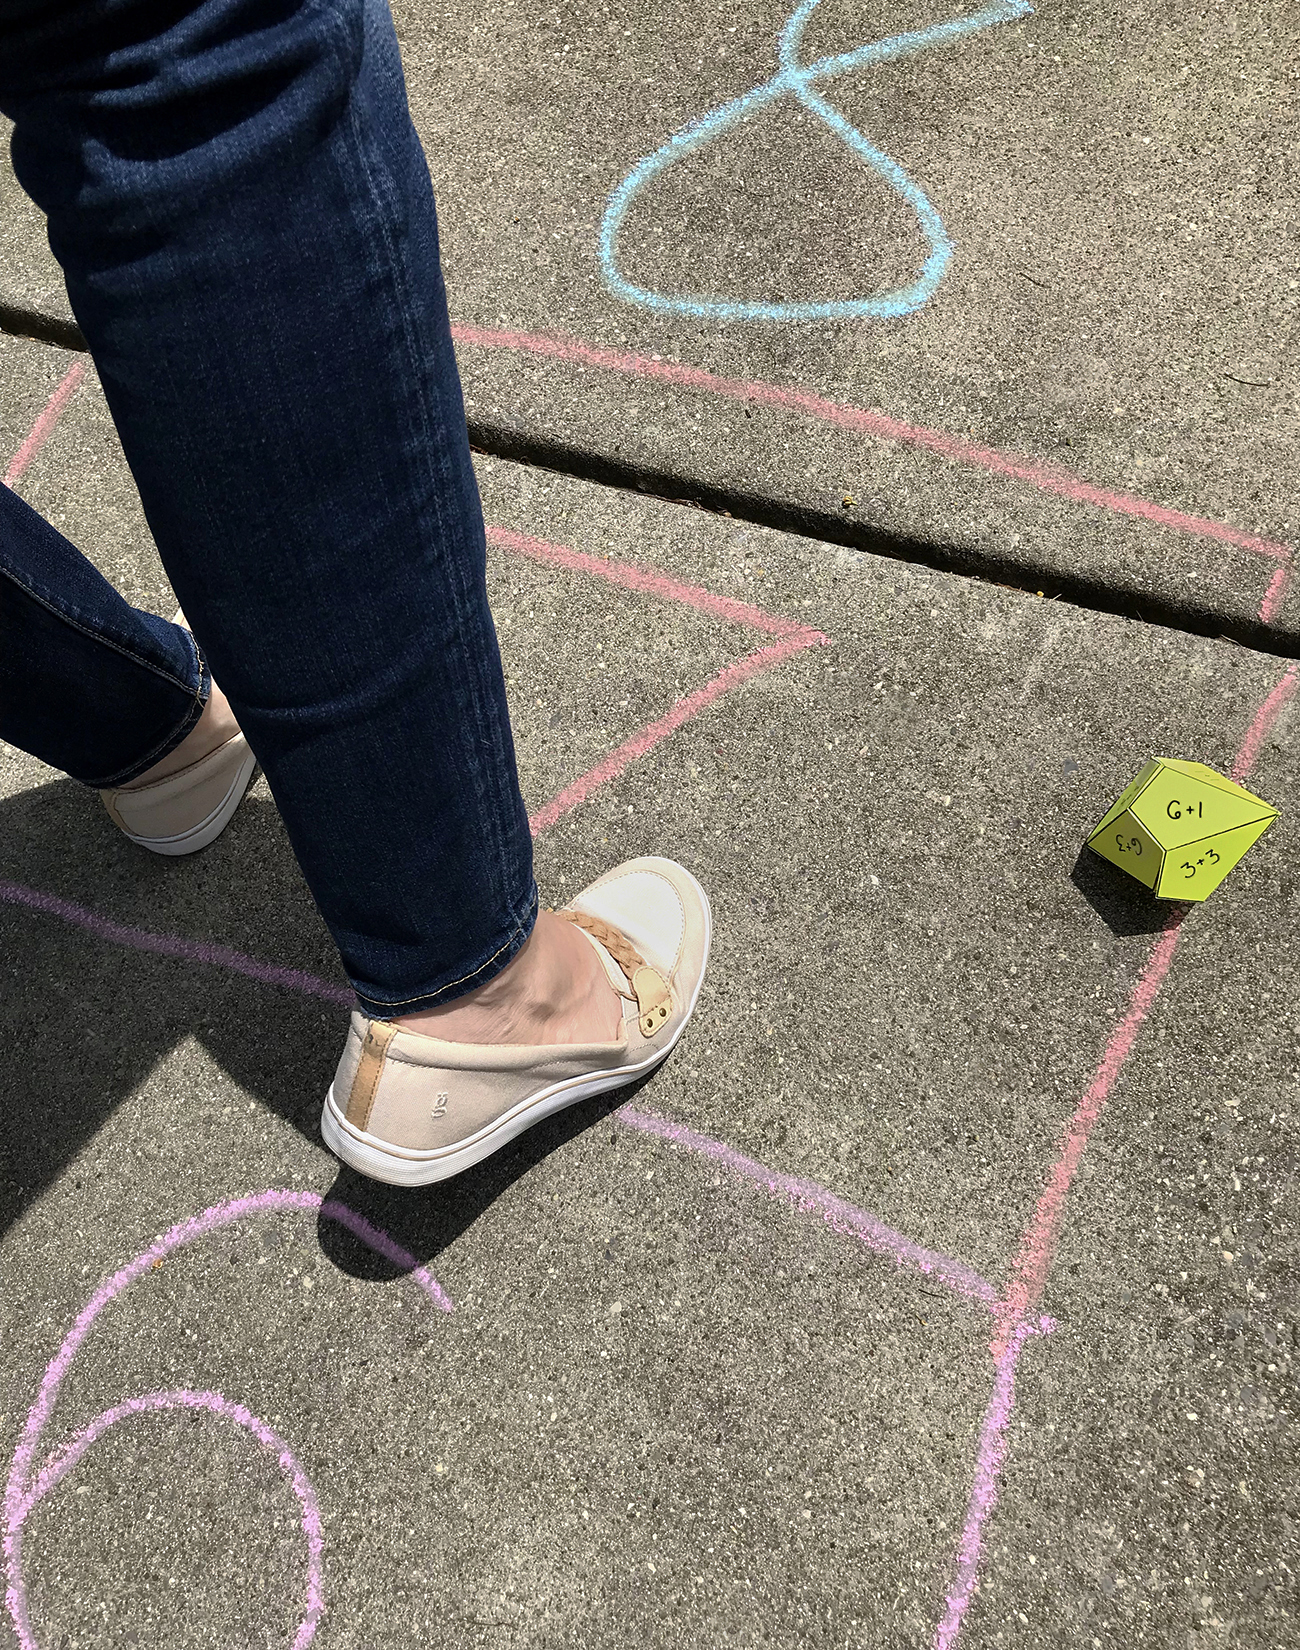 Sidewalk Chalk Adding Game